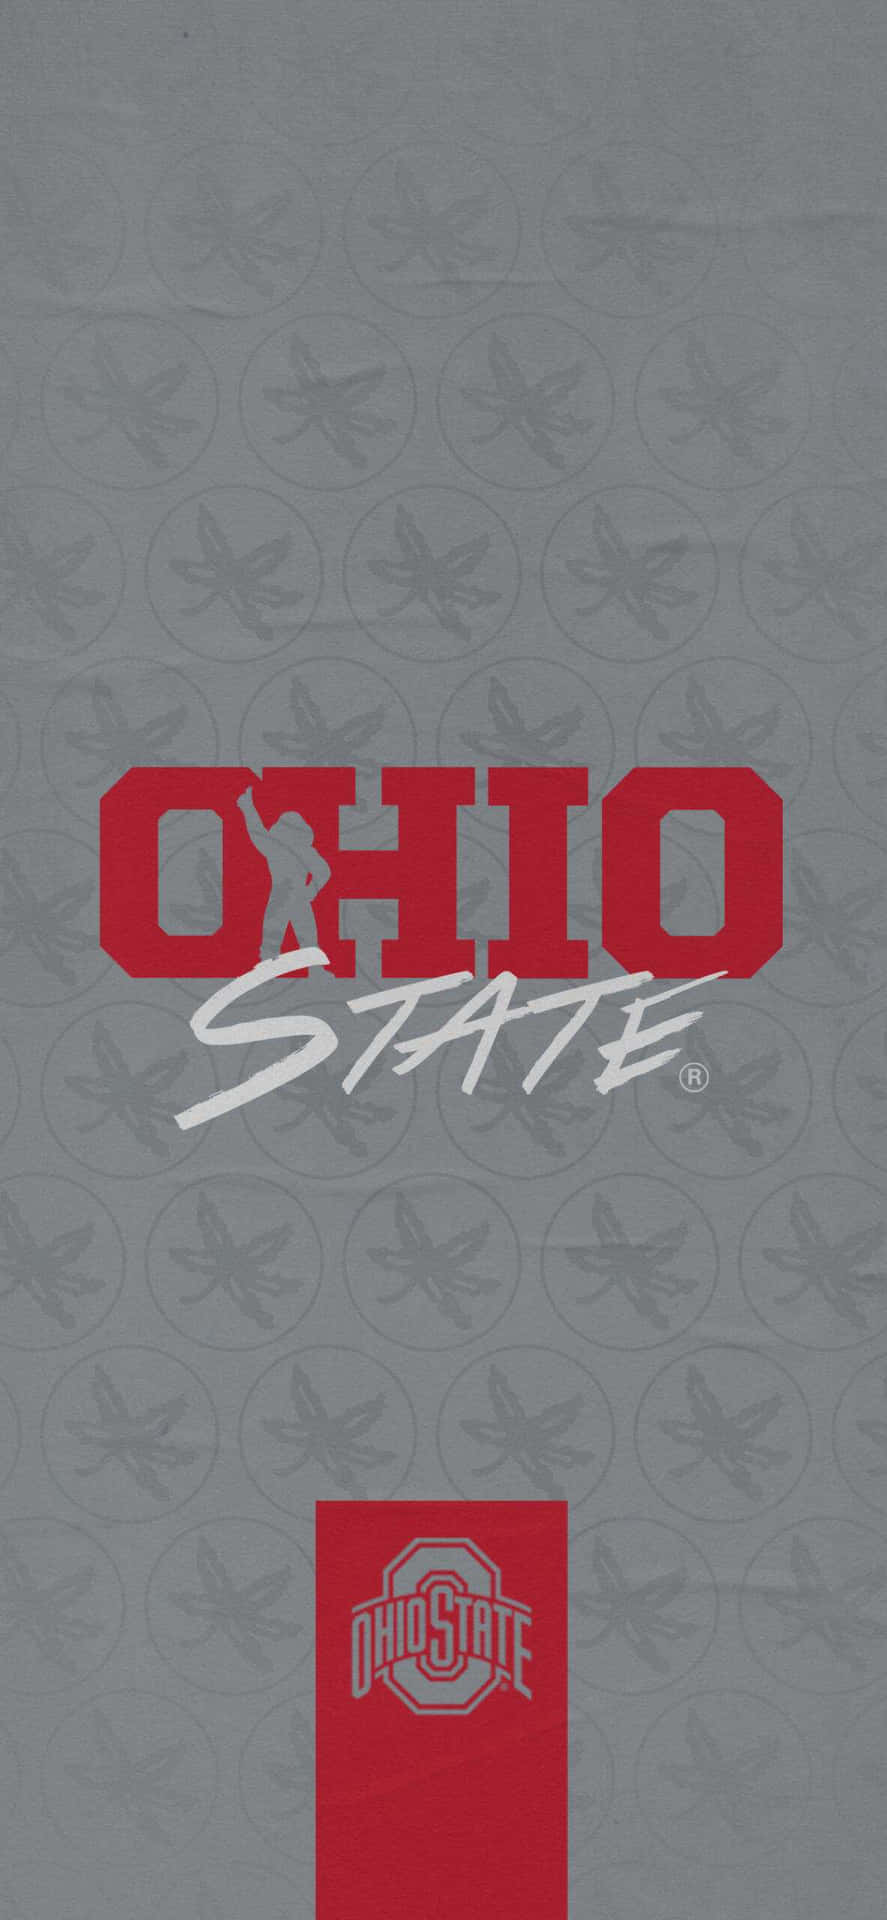 Muestratu Espíritu: Ohio State Football En El Iphone. Fondo de pantalla